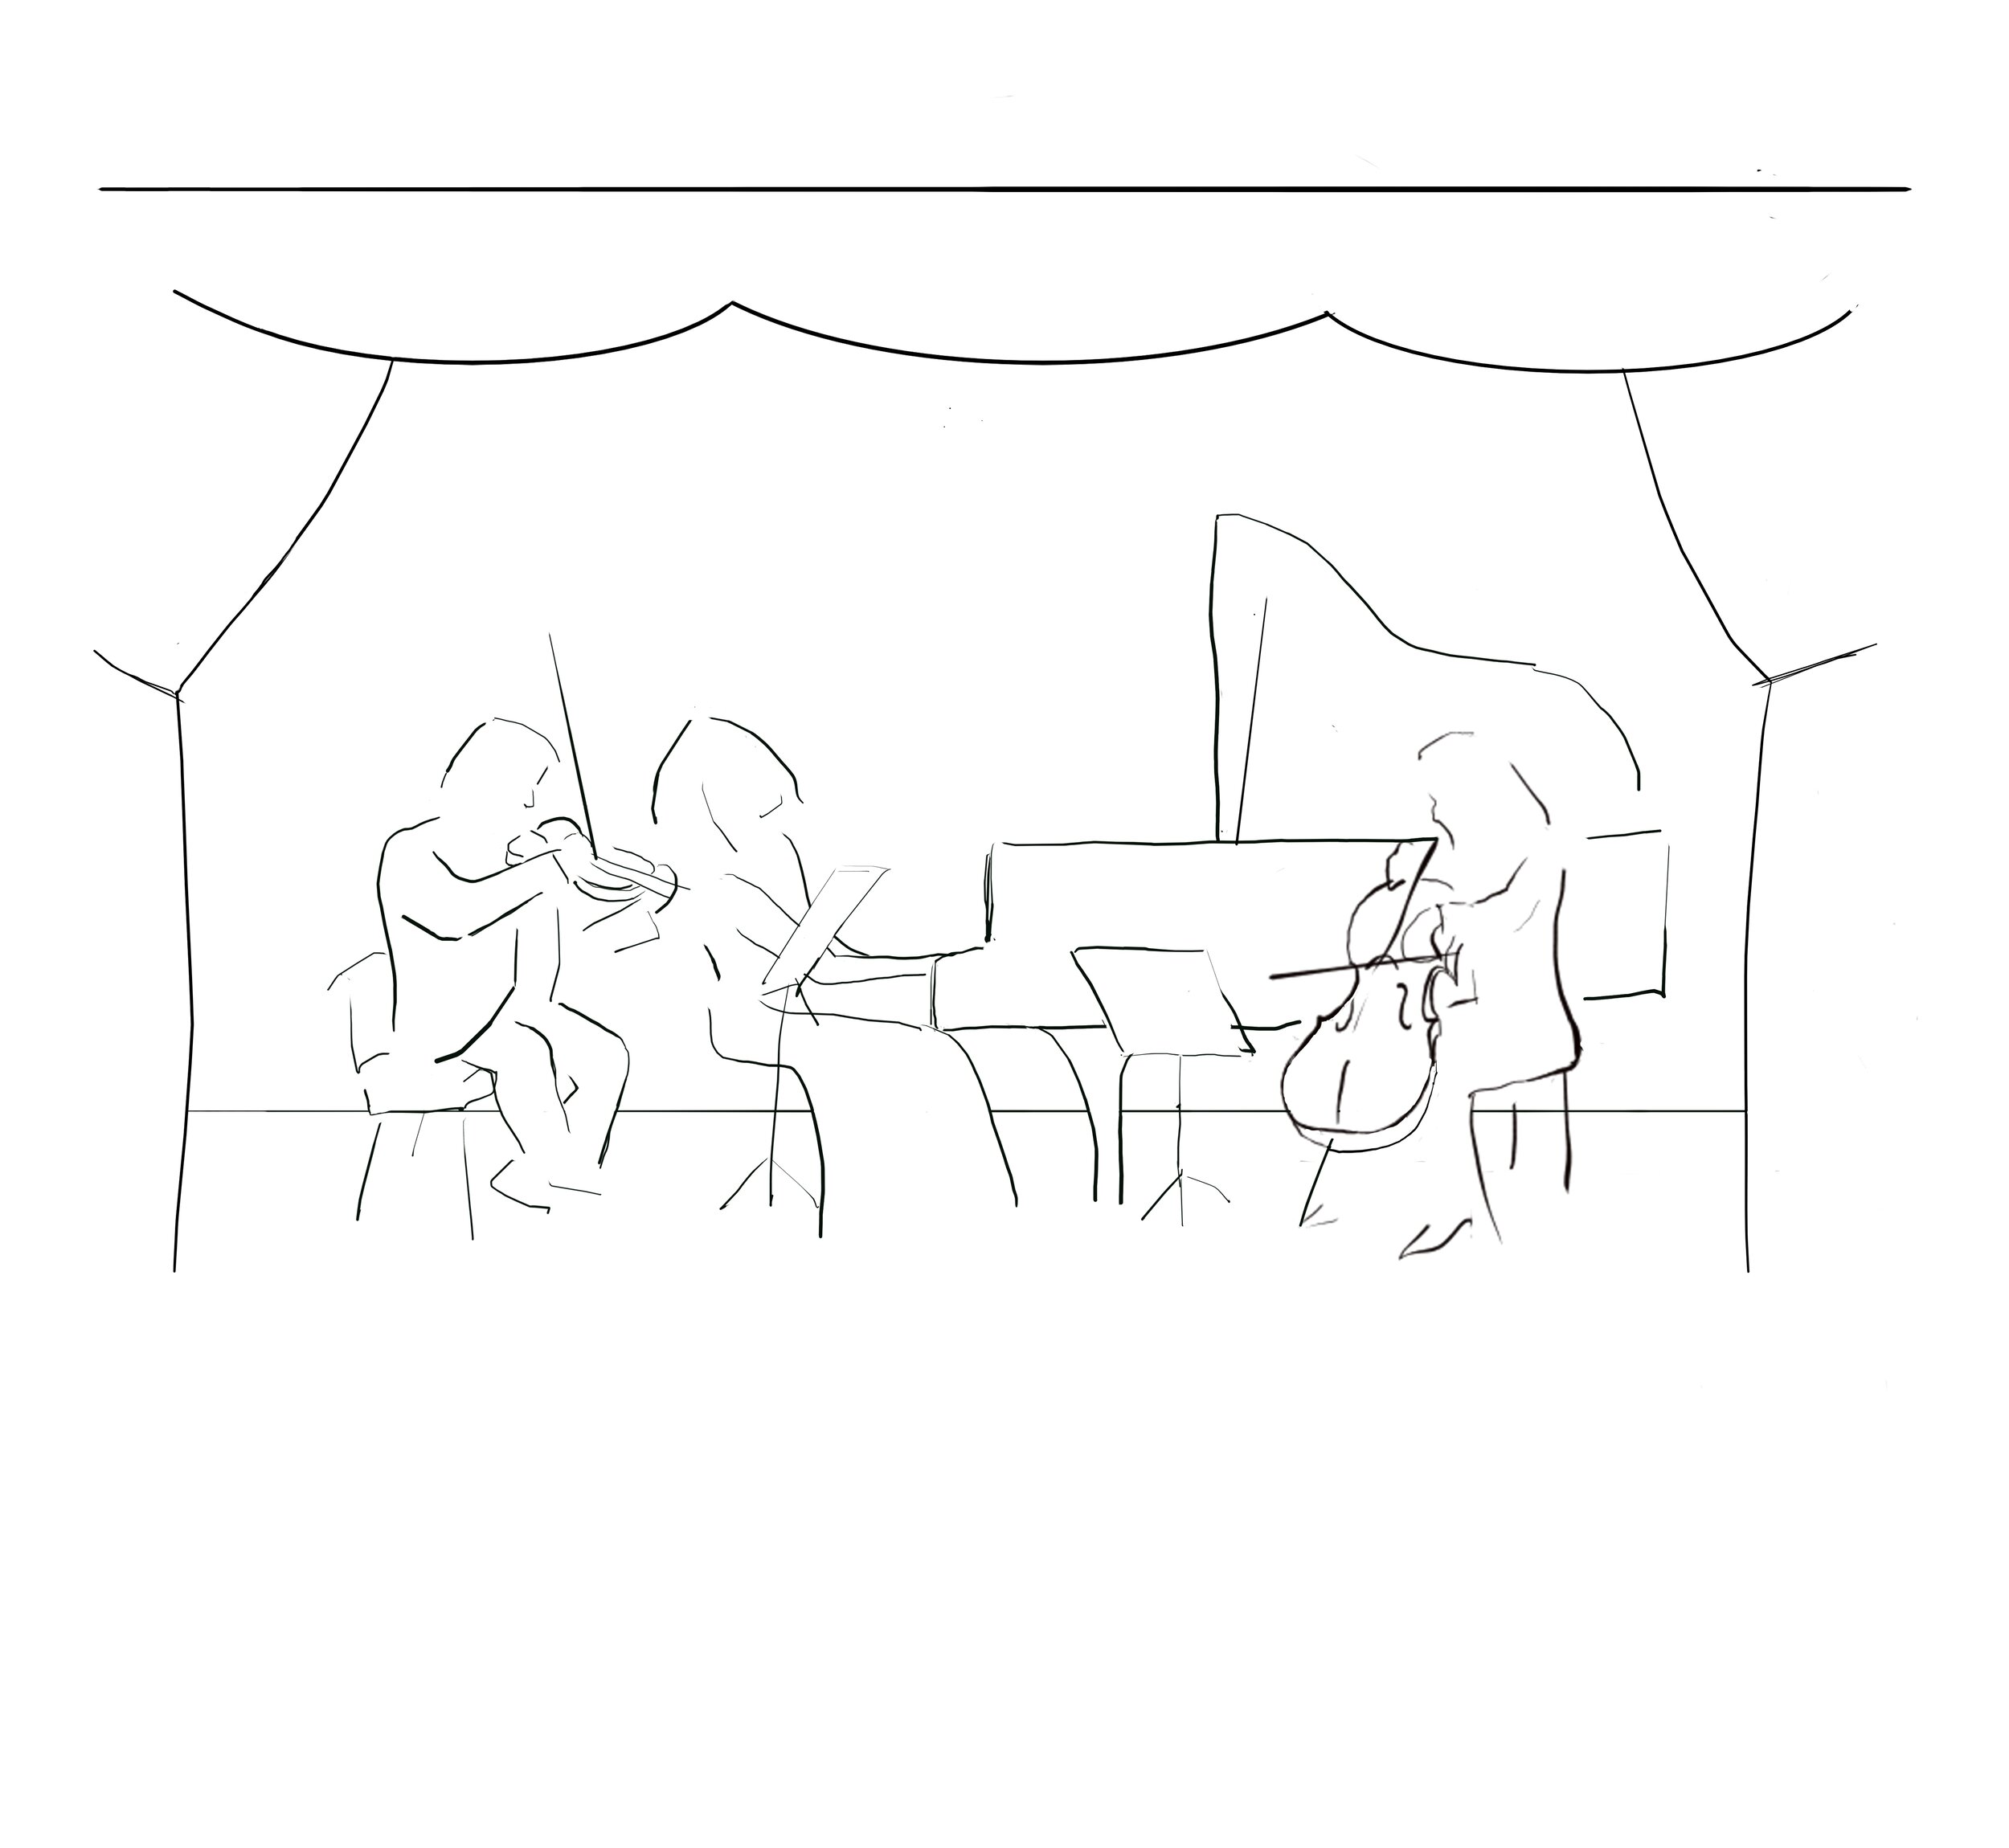 Piano Trio; 2020, drawn with Krita